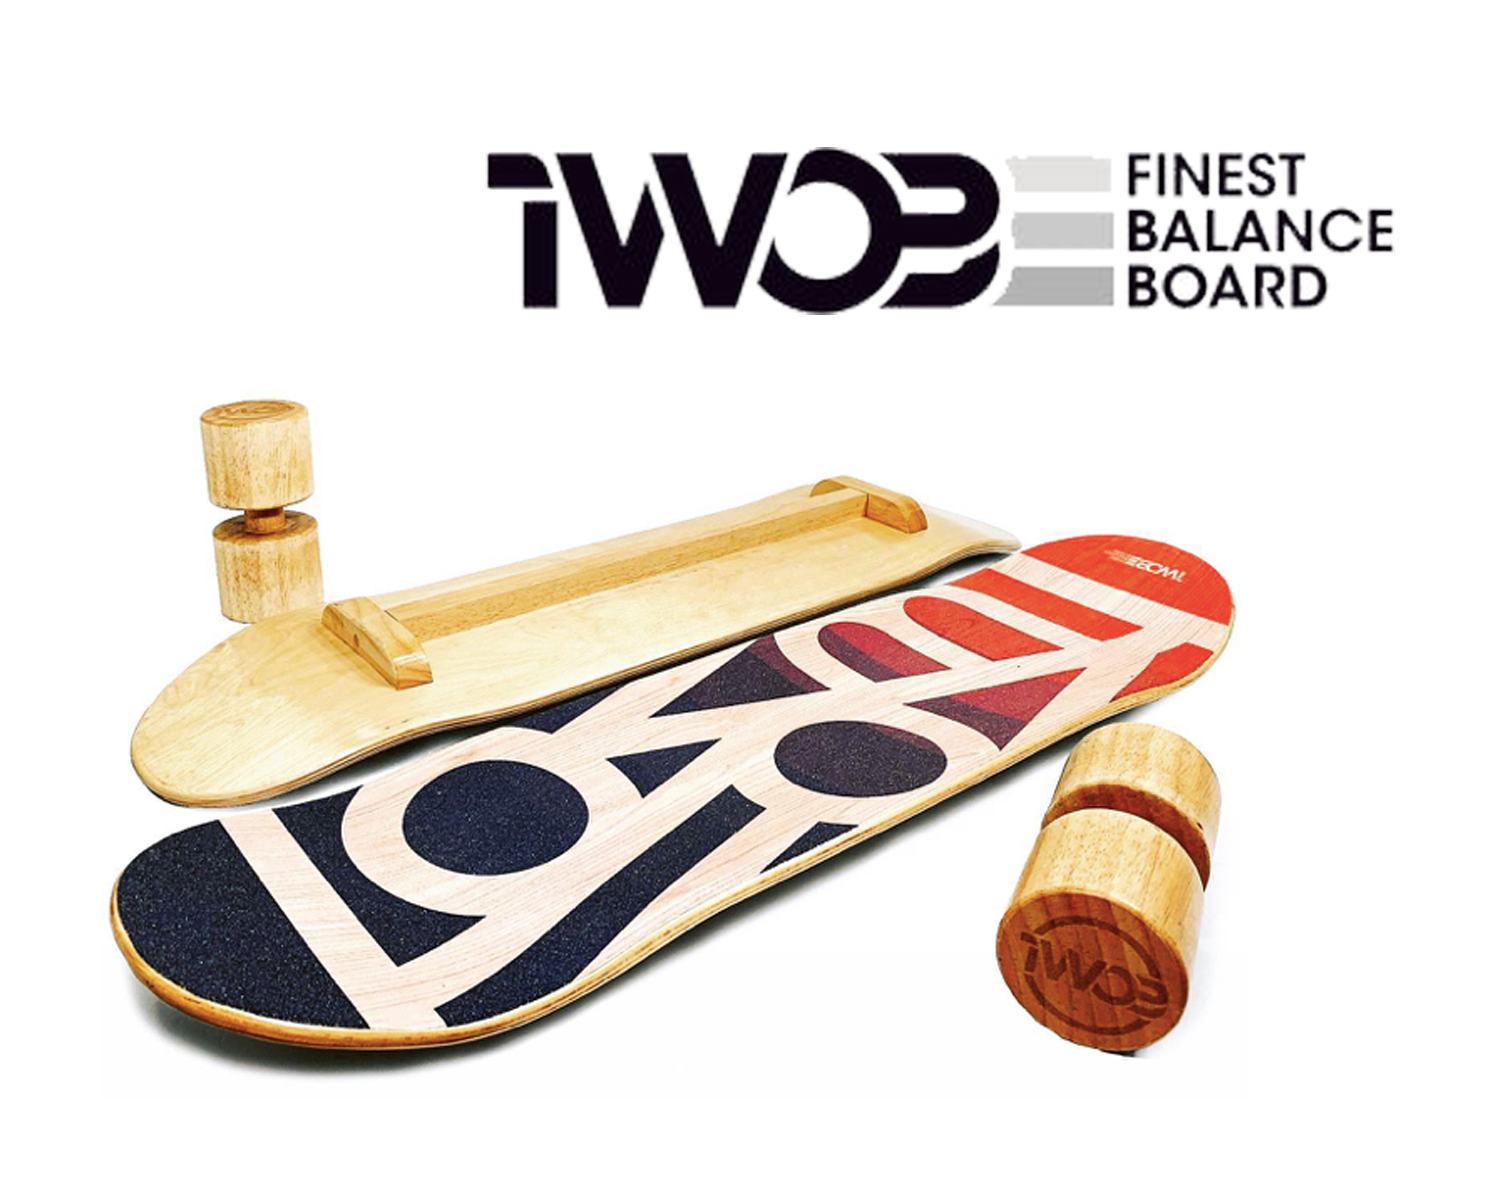 NEW Brand! TWOB-Sport Balance Boards